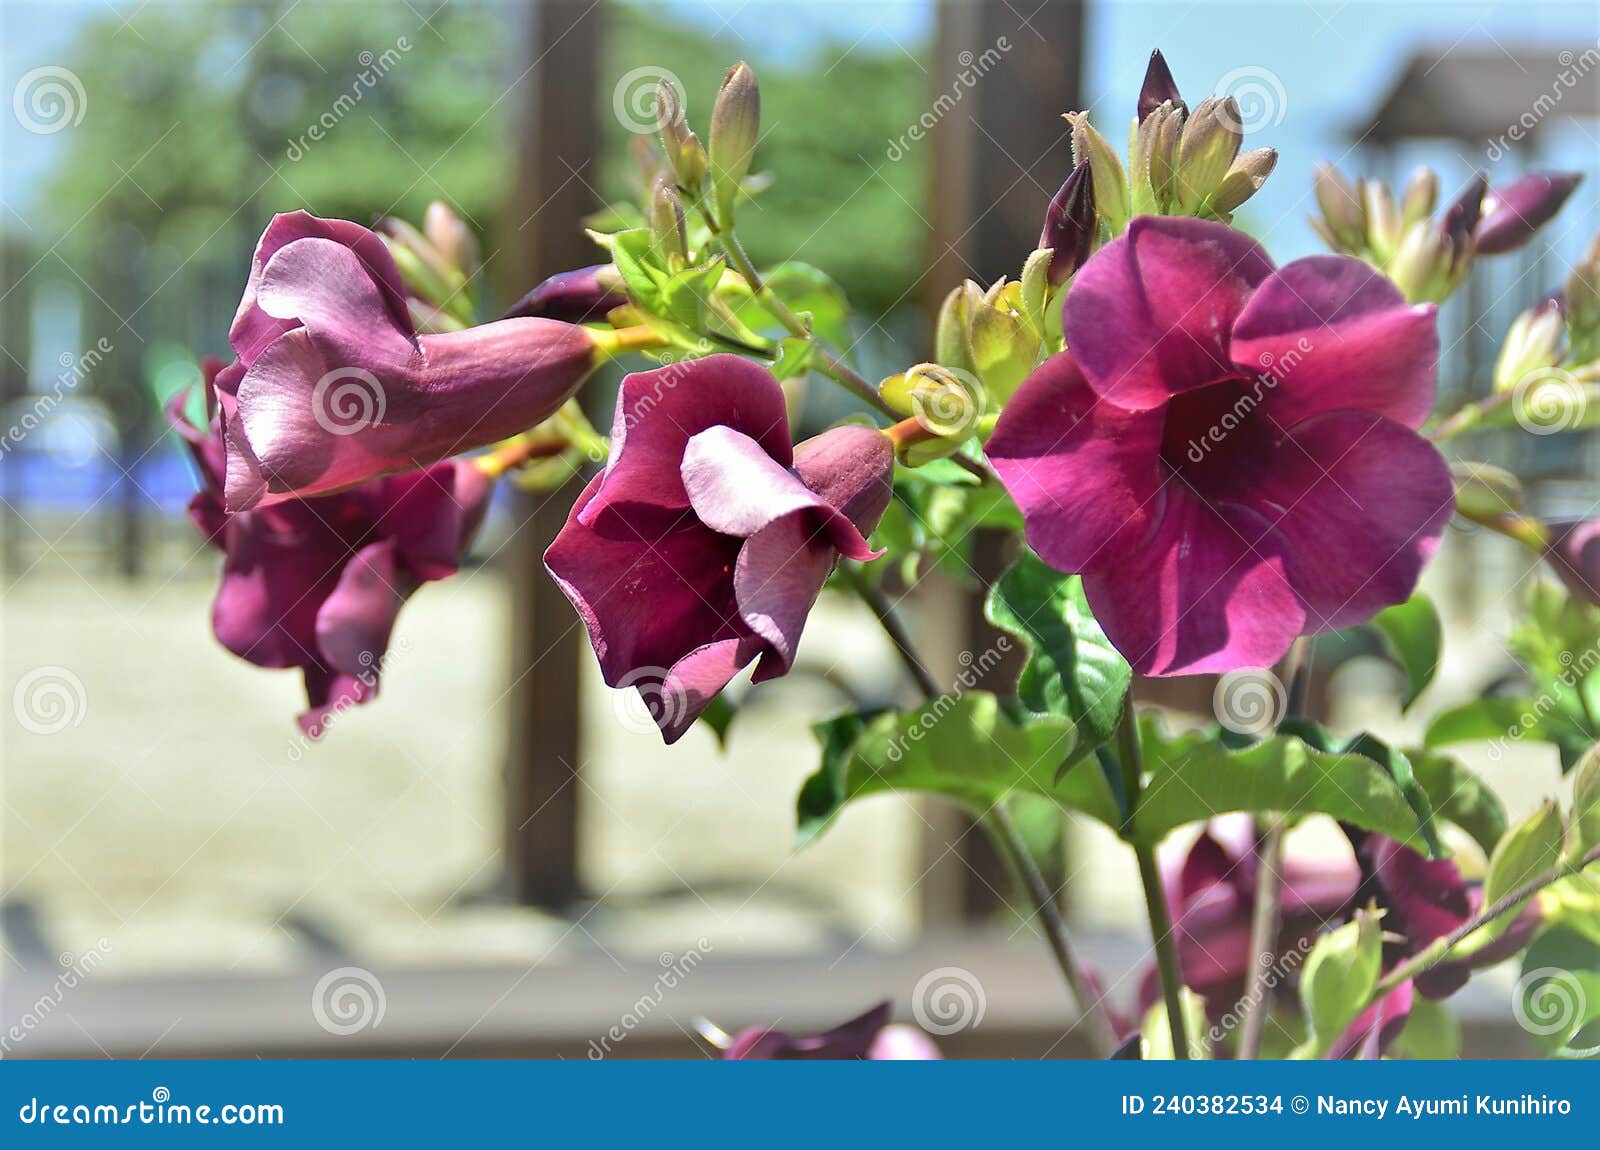 allamanda blanchetti flowers in the garden